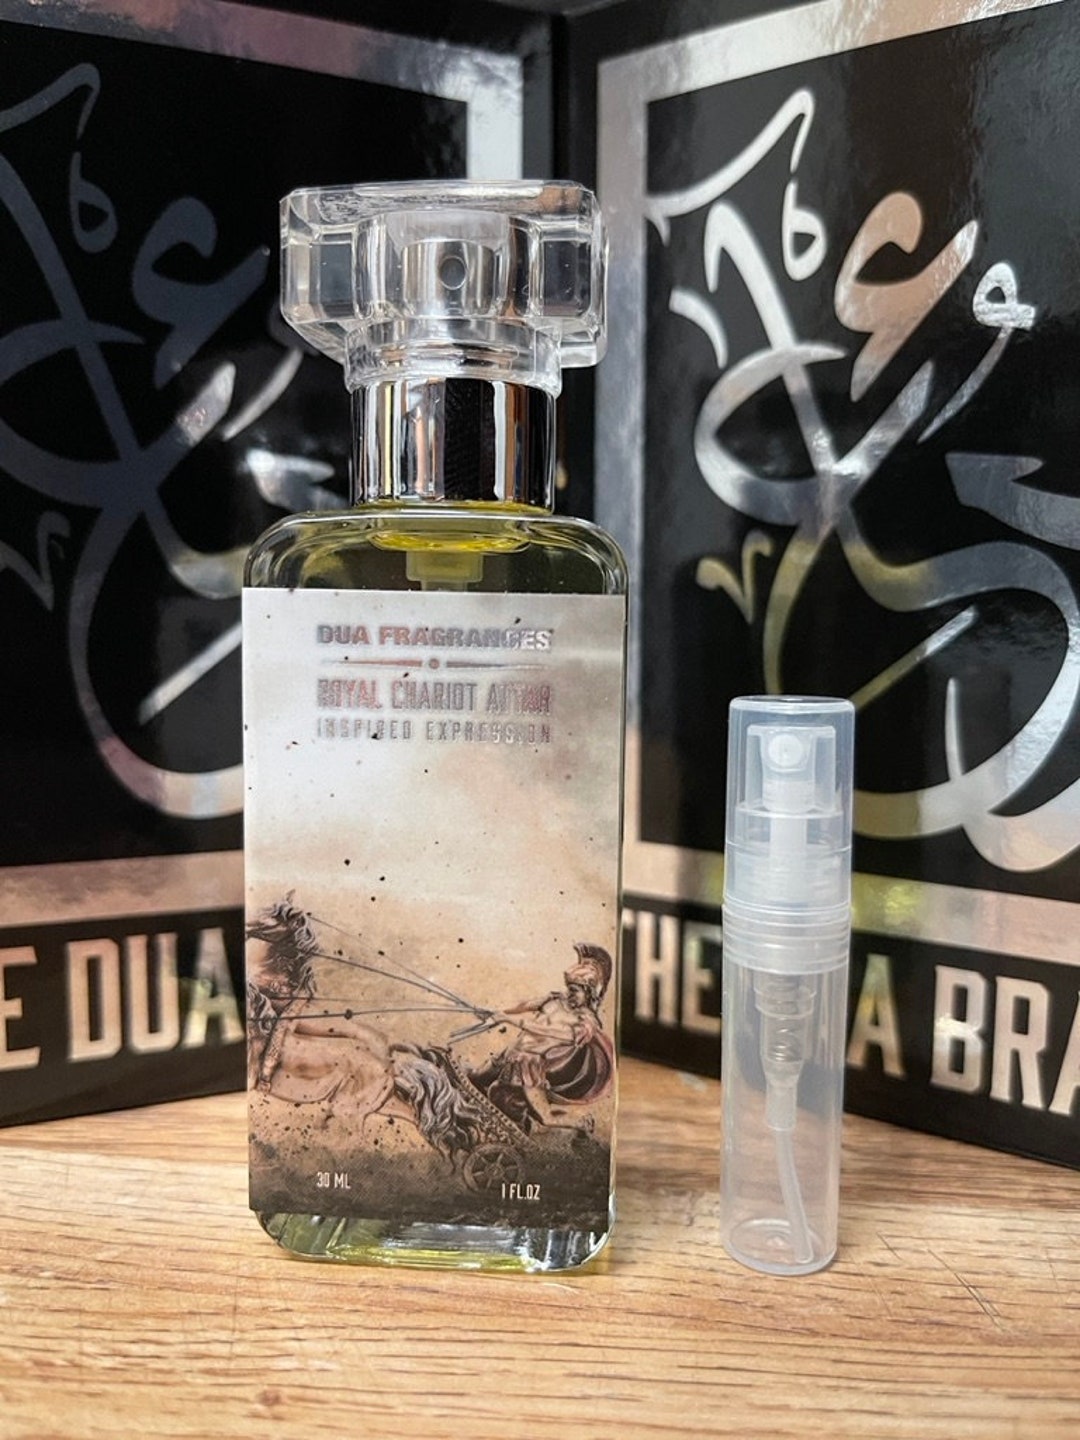 Aquatic Seduction The Dua Brand perfume - a fragrance for women and men 2021